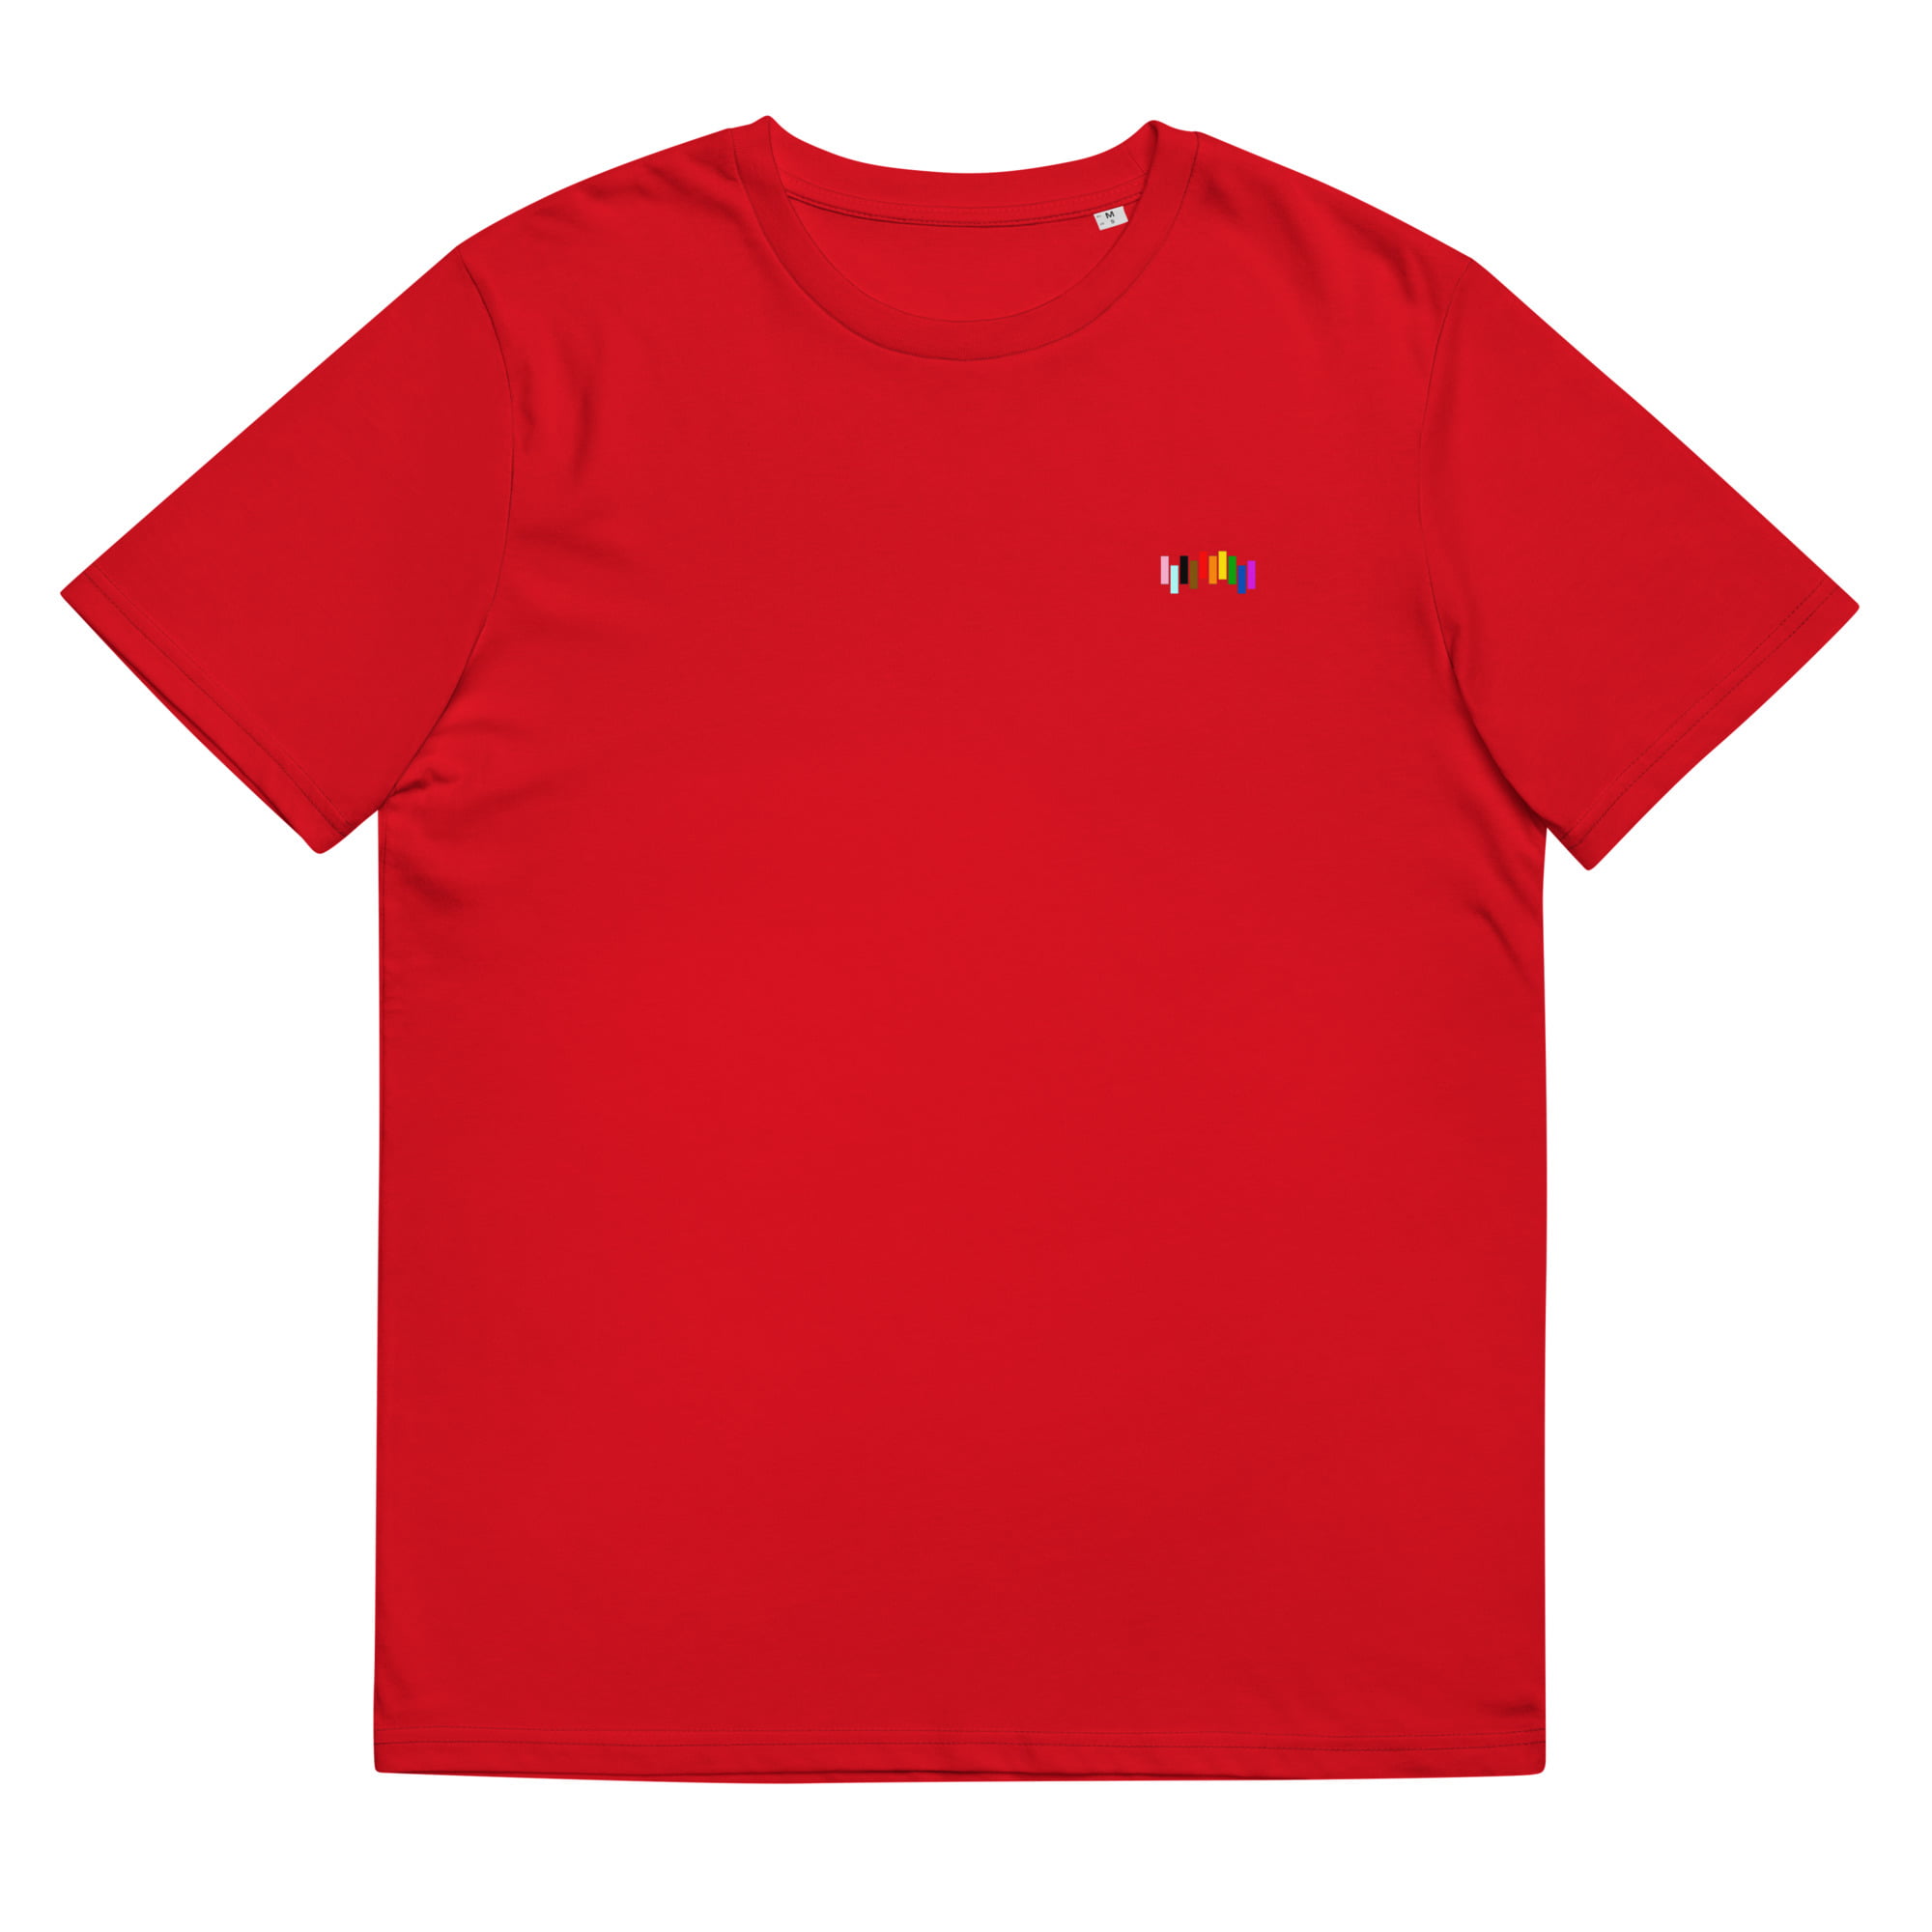 unisex organic cotton t shirt red front 64894e9d3c32c 1.jpg